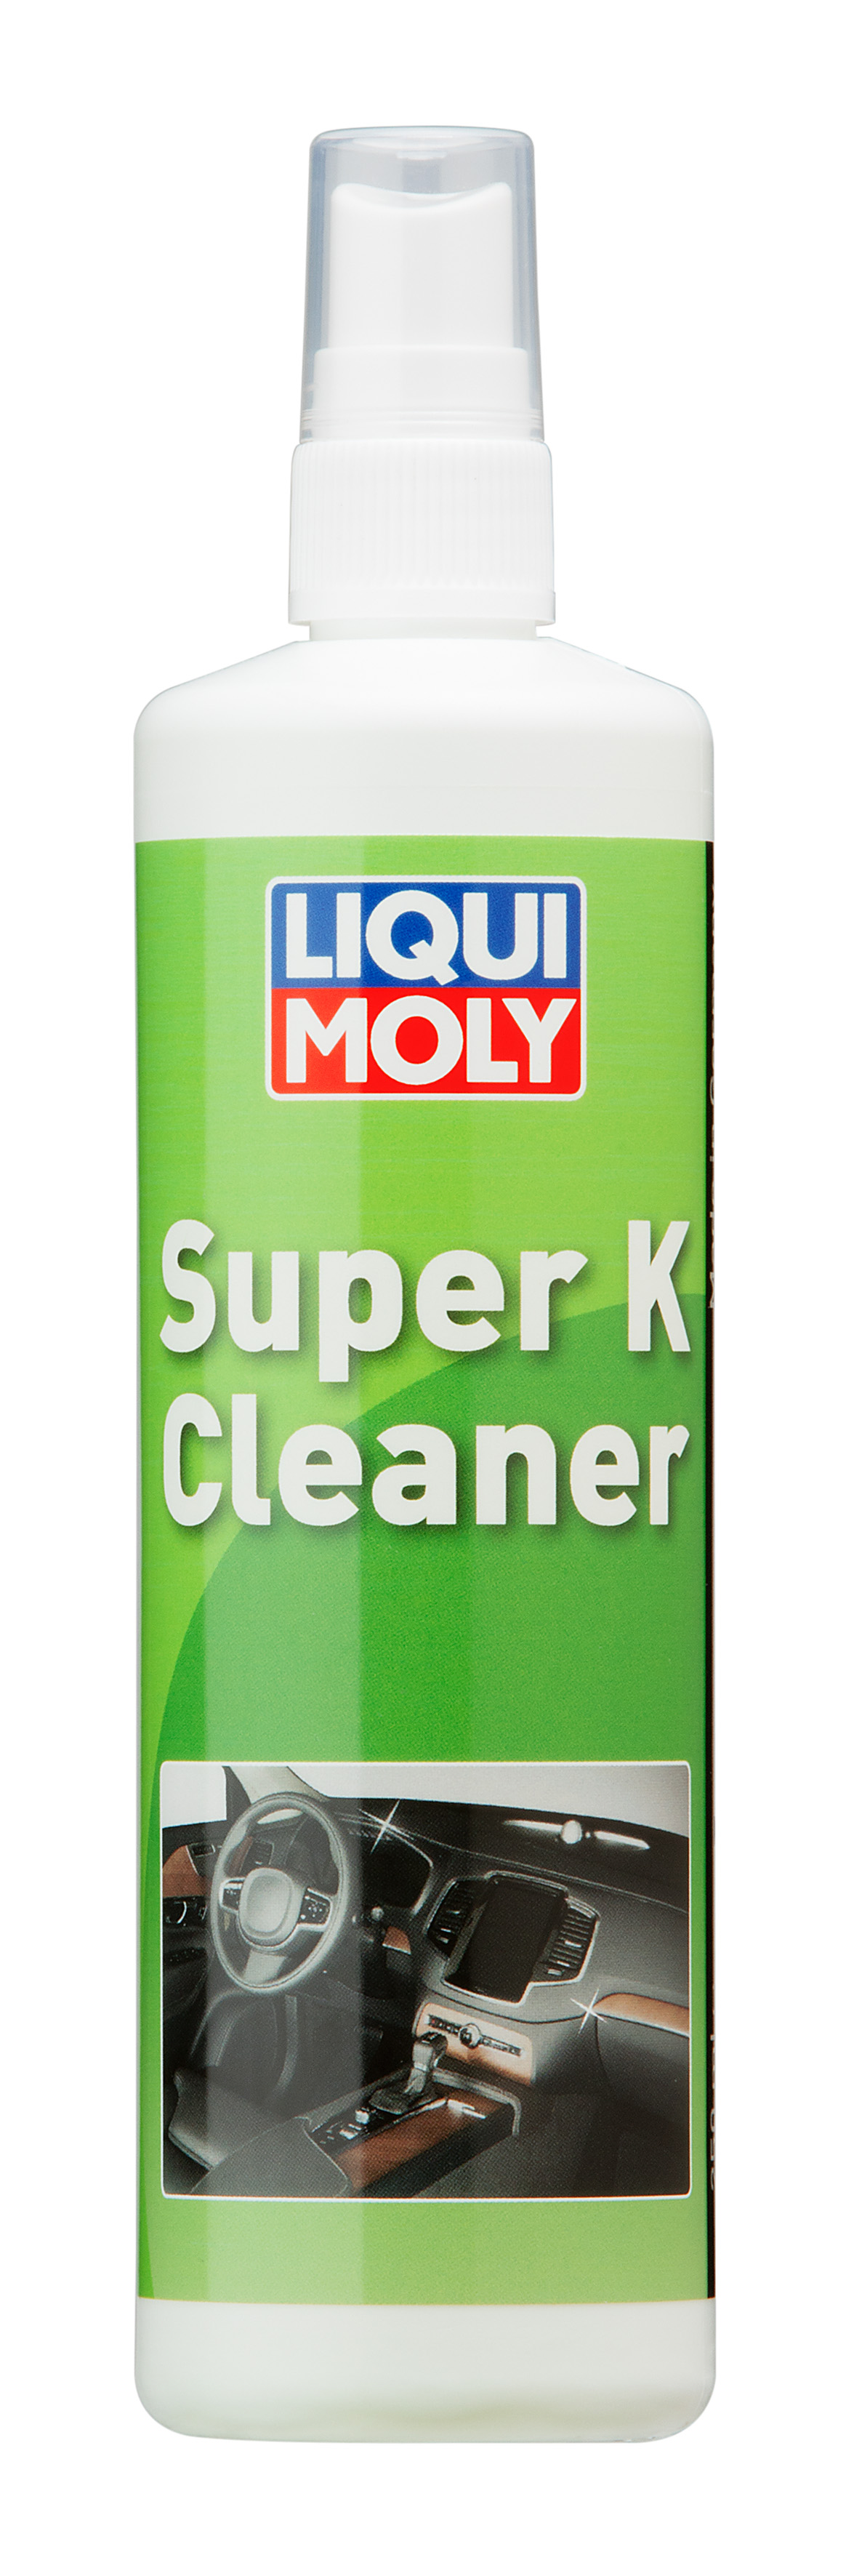 Супер очиститель салона и кузова Super k Cleaner, 250мл - Liqui Moly 1682